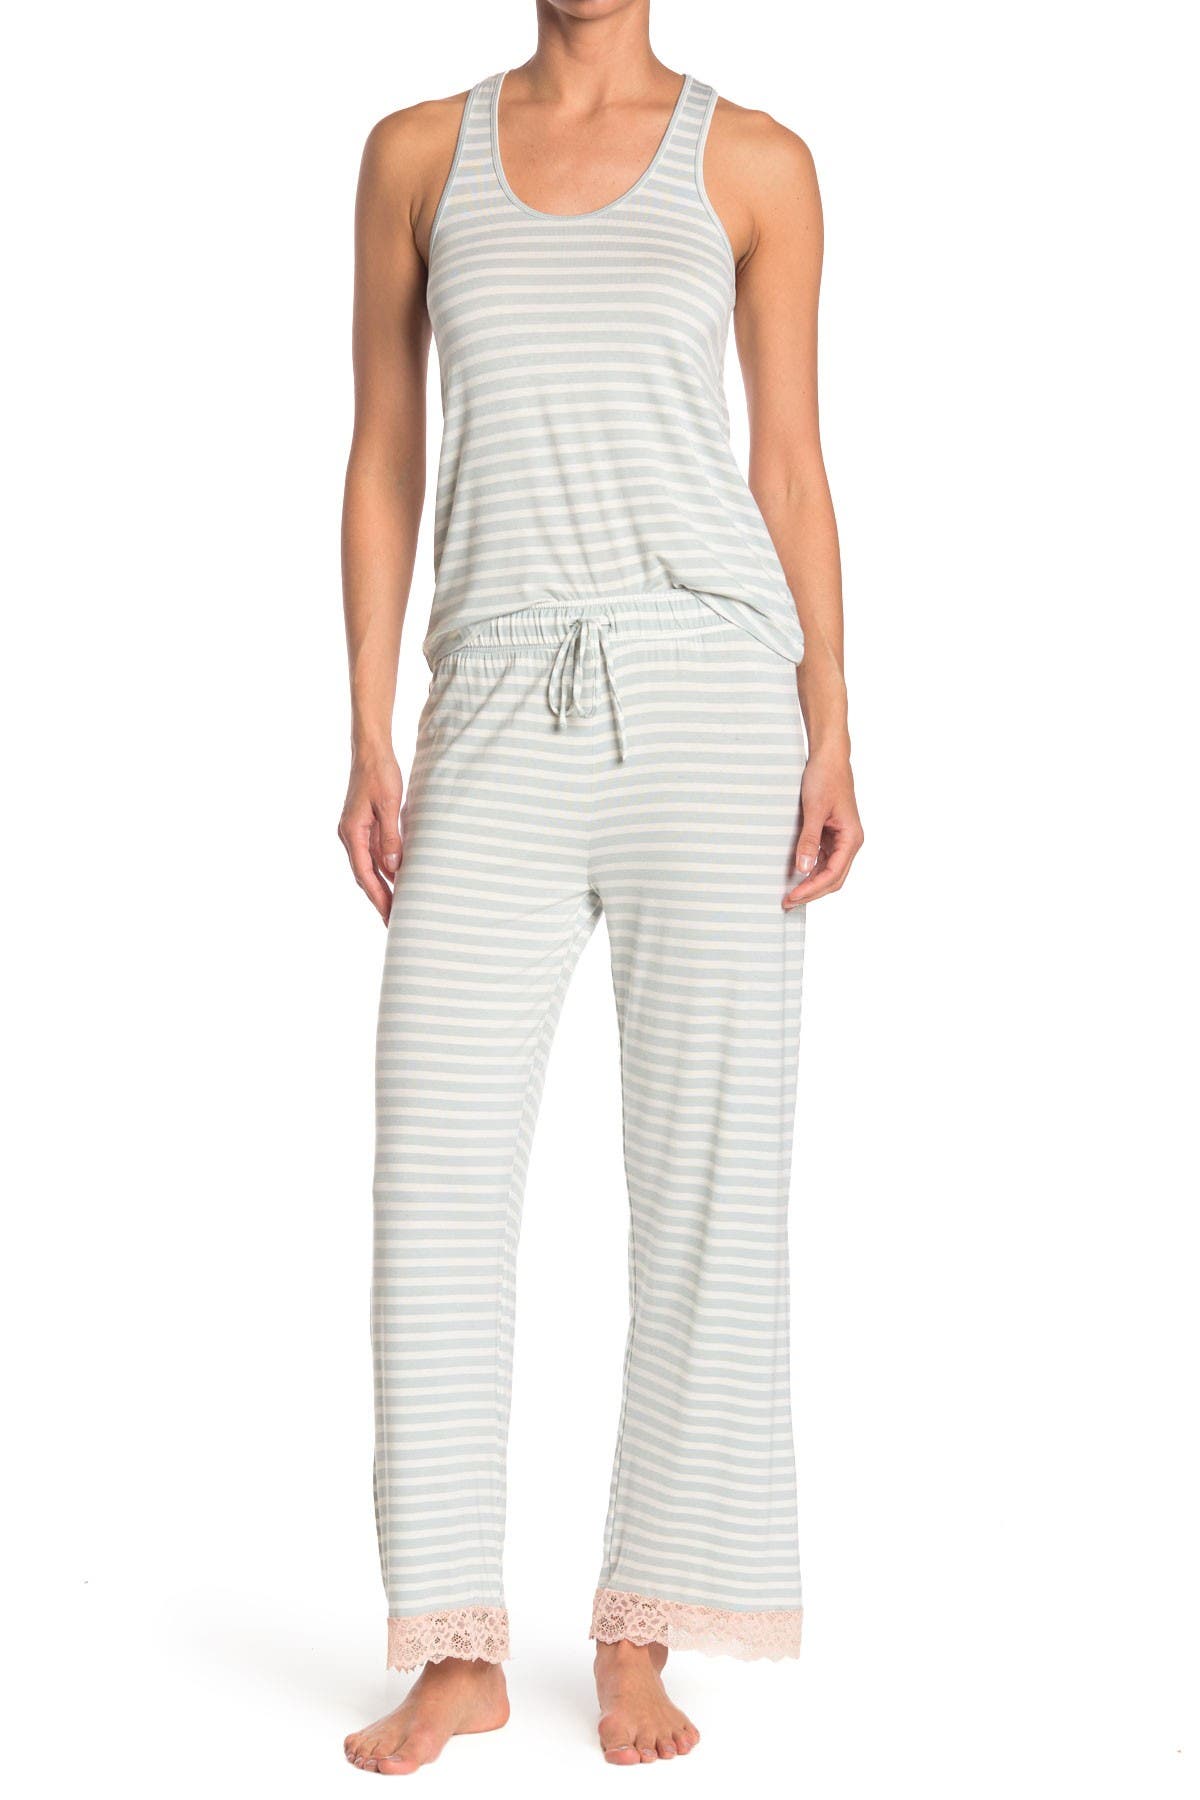 Honeydew Intimates Striped Lace Trim Tank & Pants 2-piece Pajama Set In Chstripe